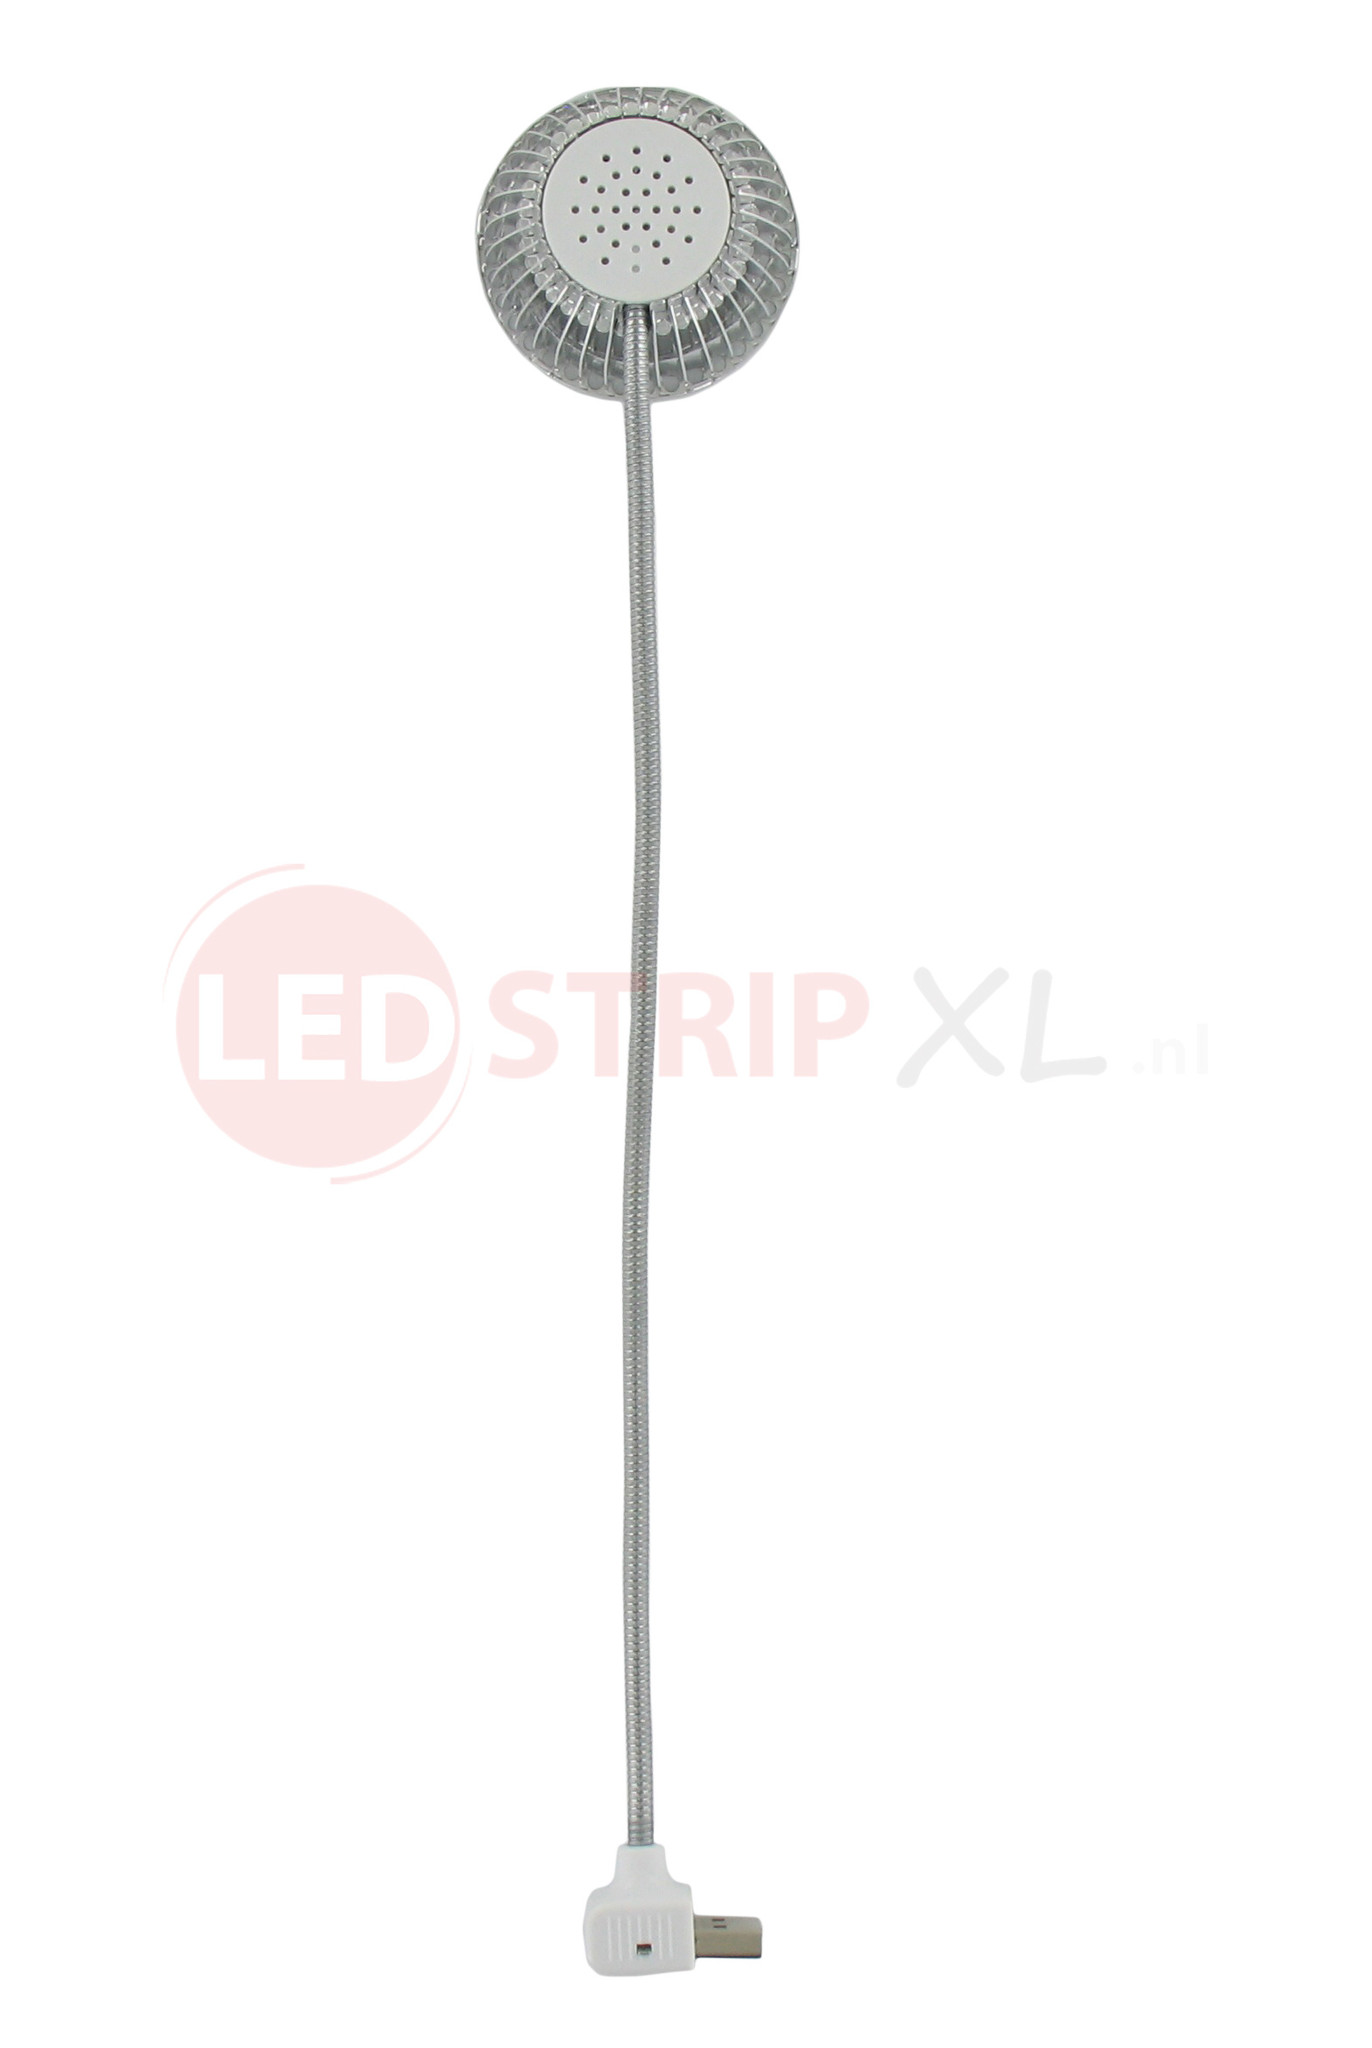 Goot landheer vijand USB mini LED-lampje / leeslampje - helder wit - spiraalkabel - LEDStripXL